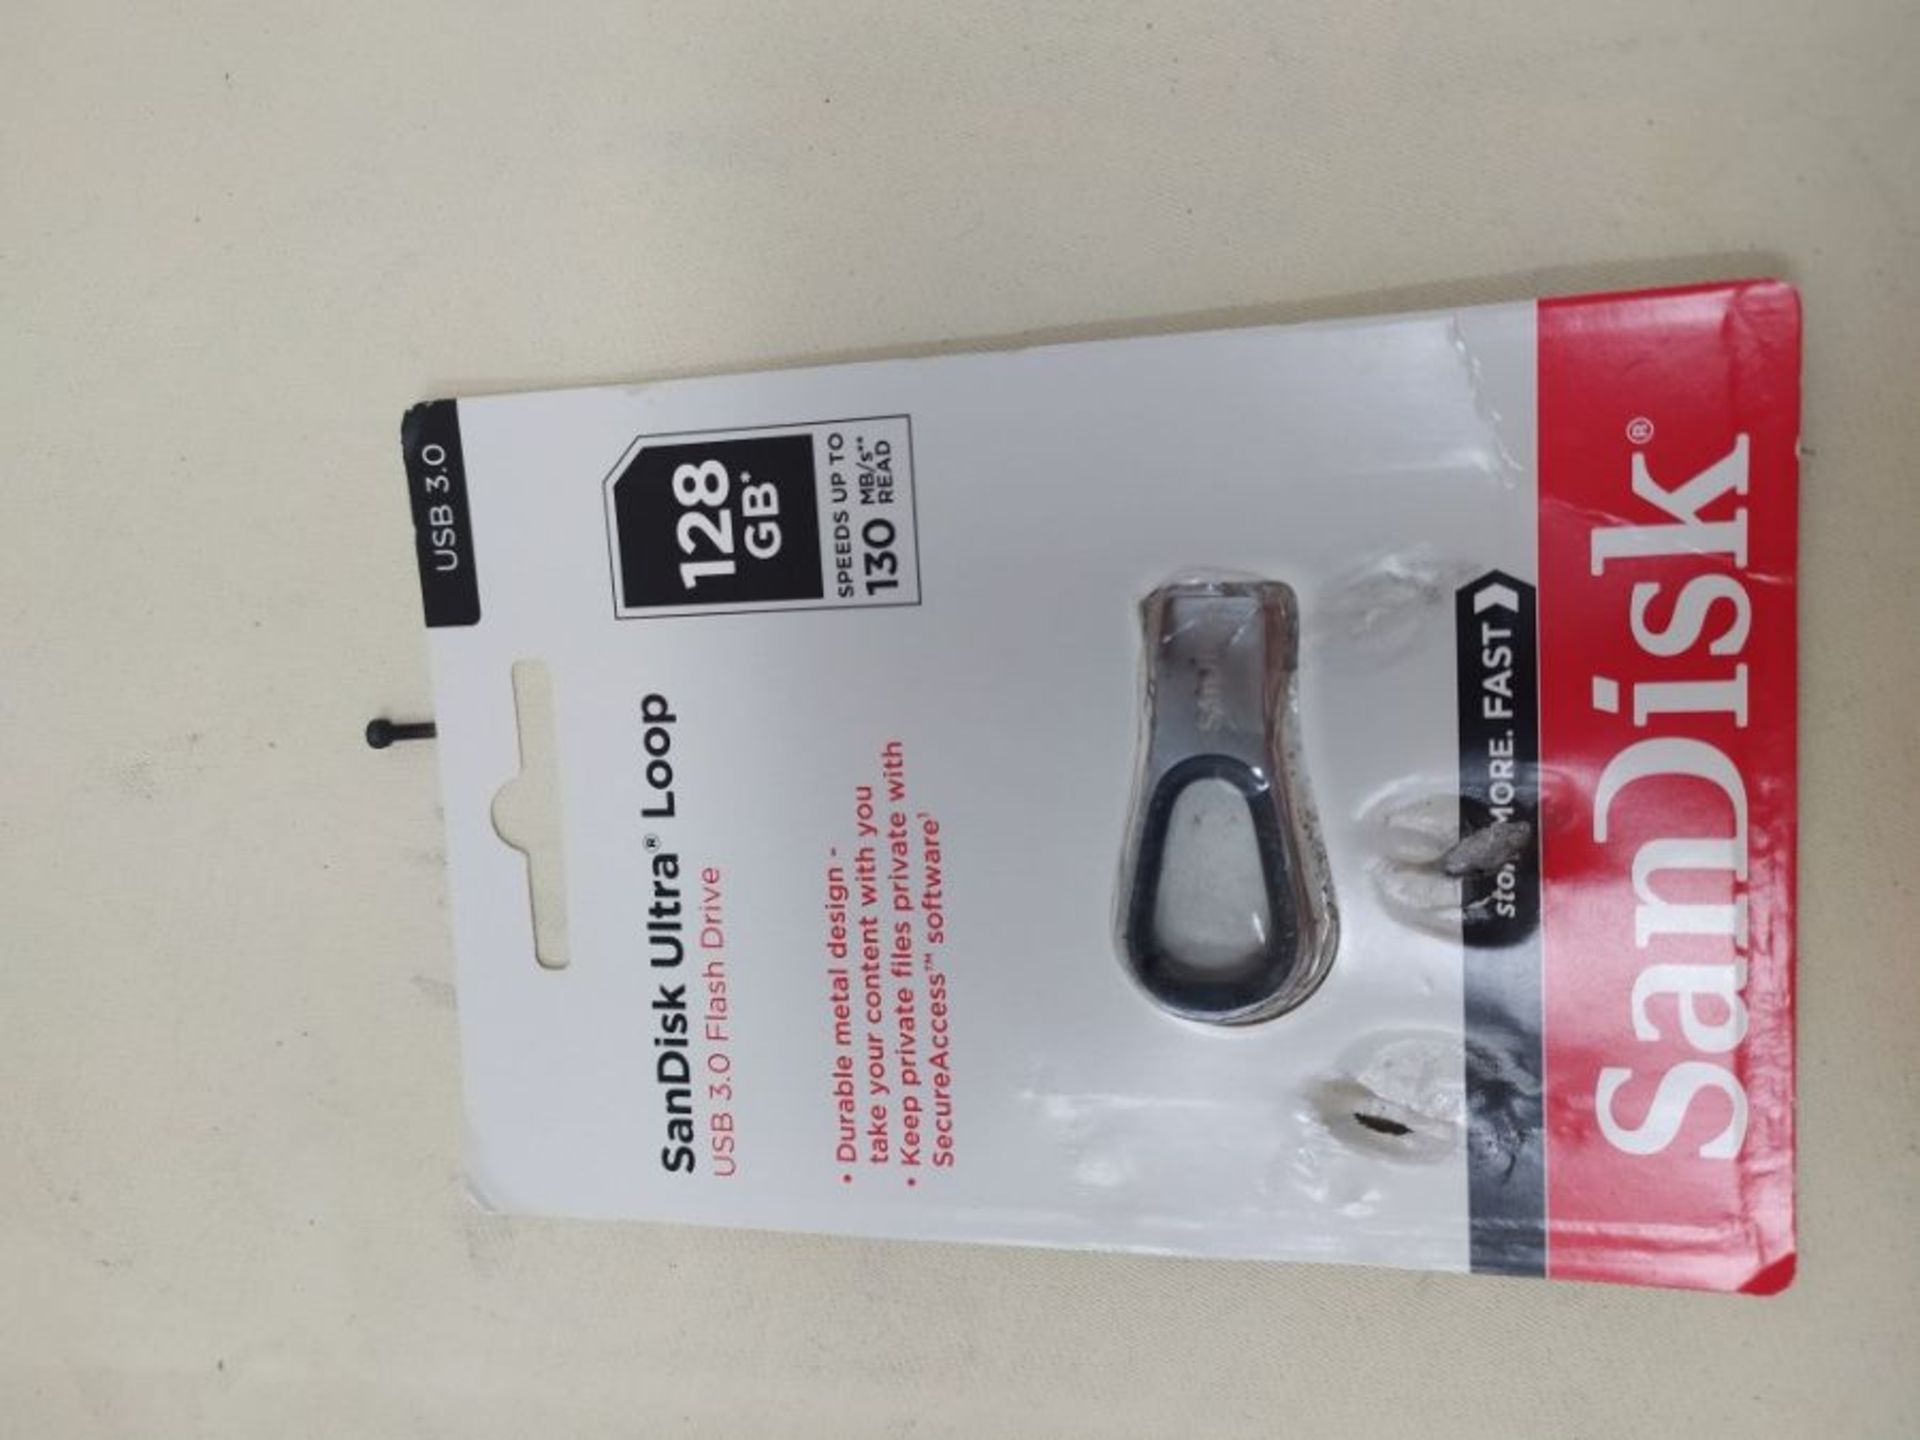 SanDisk Ultra Loop 128GB USB 3.0 Flash Drive, Silver - Image 2 of 2